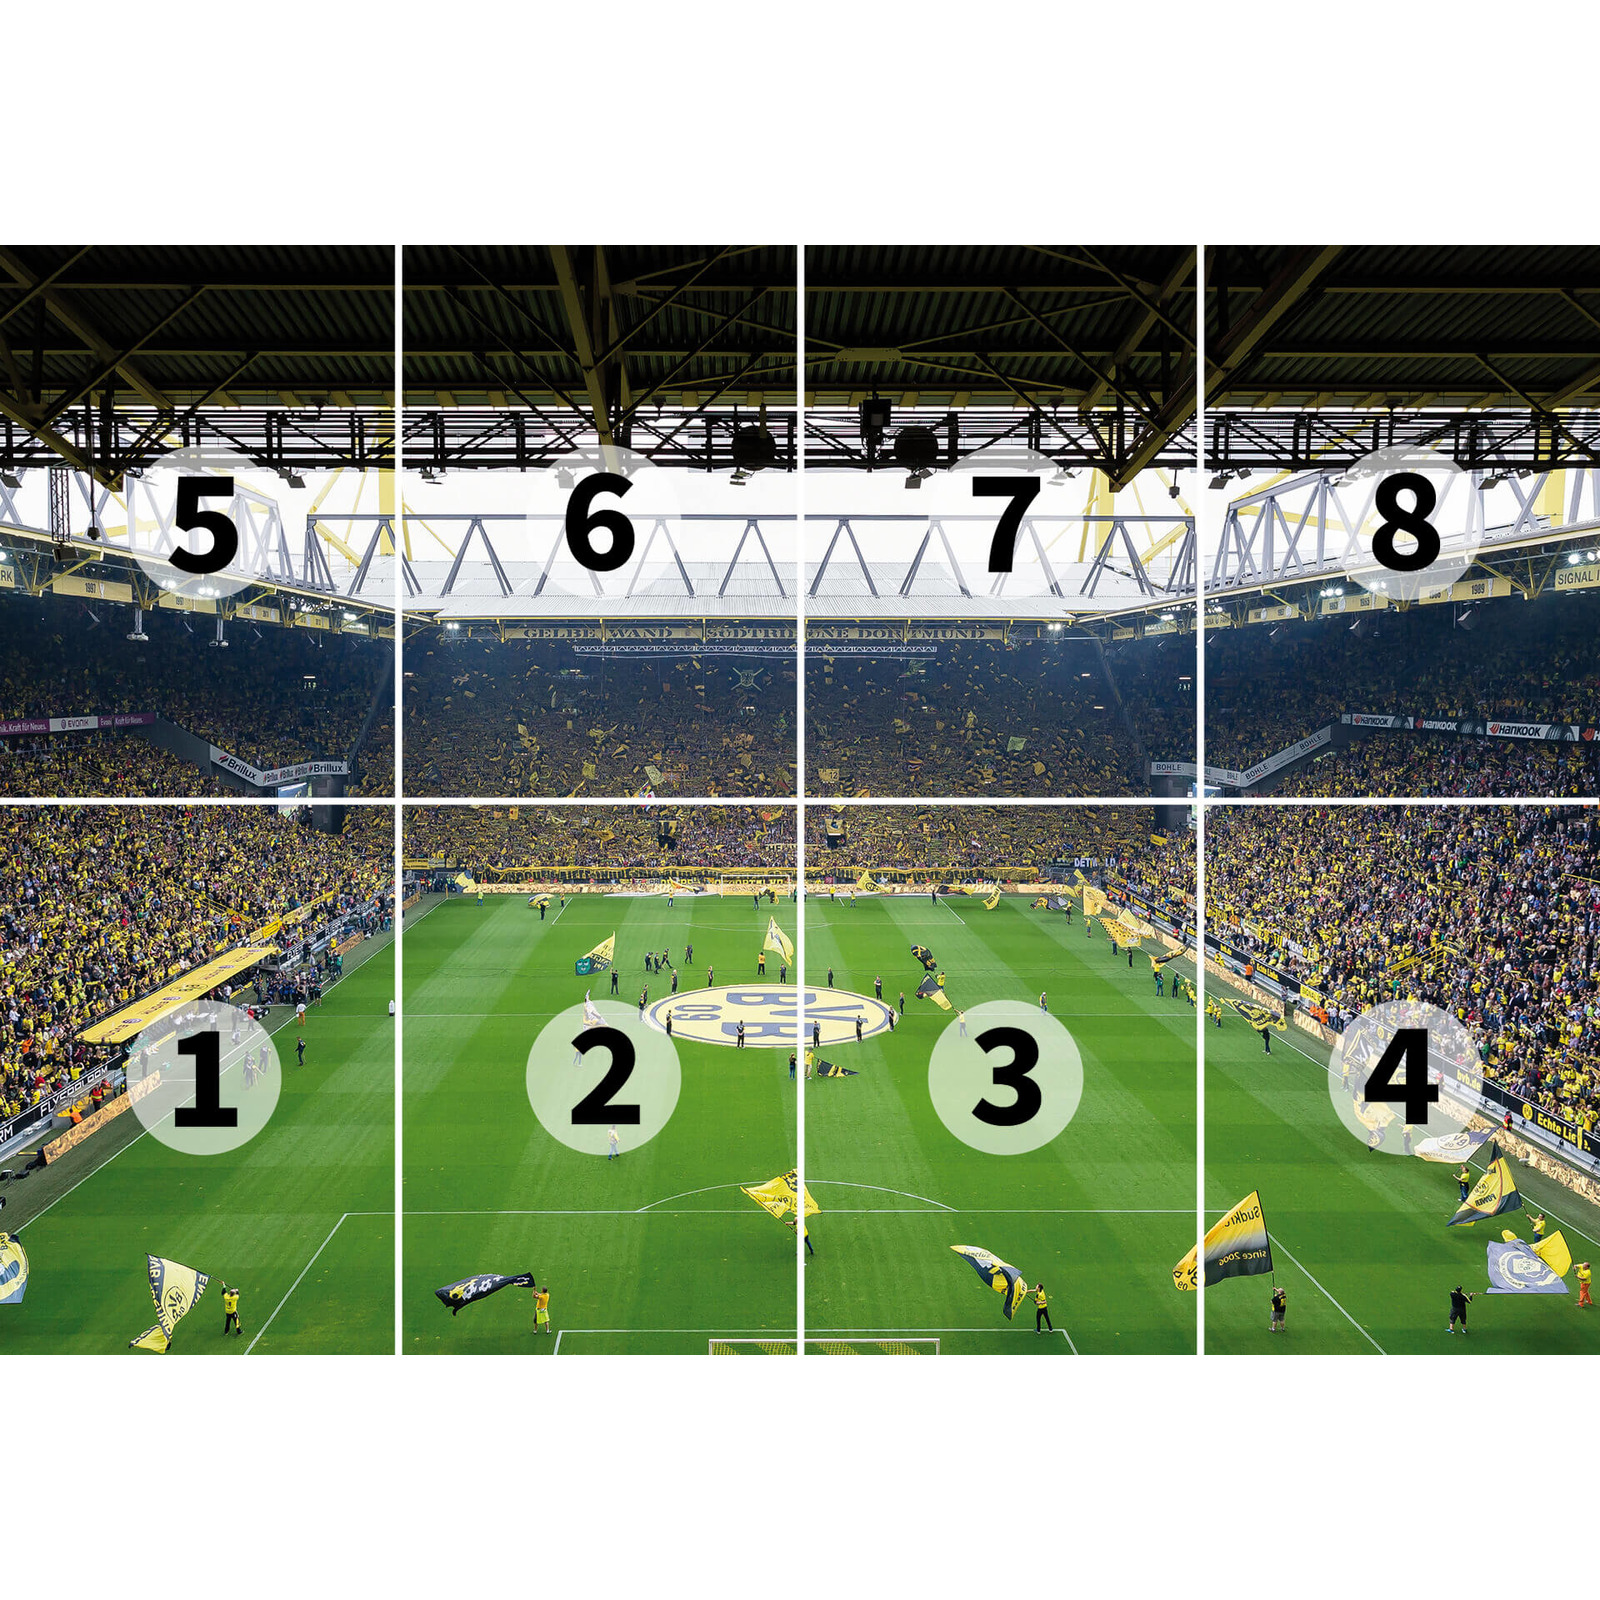             Papier peint panoramique stade Borussia Dortmund avec chœurs
        